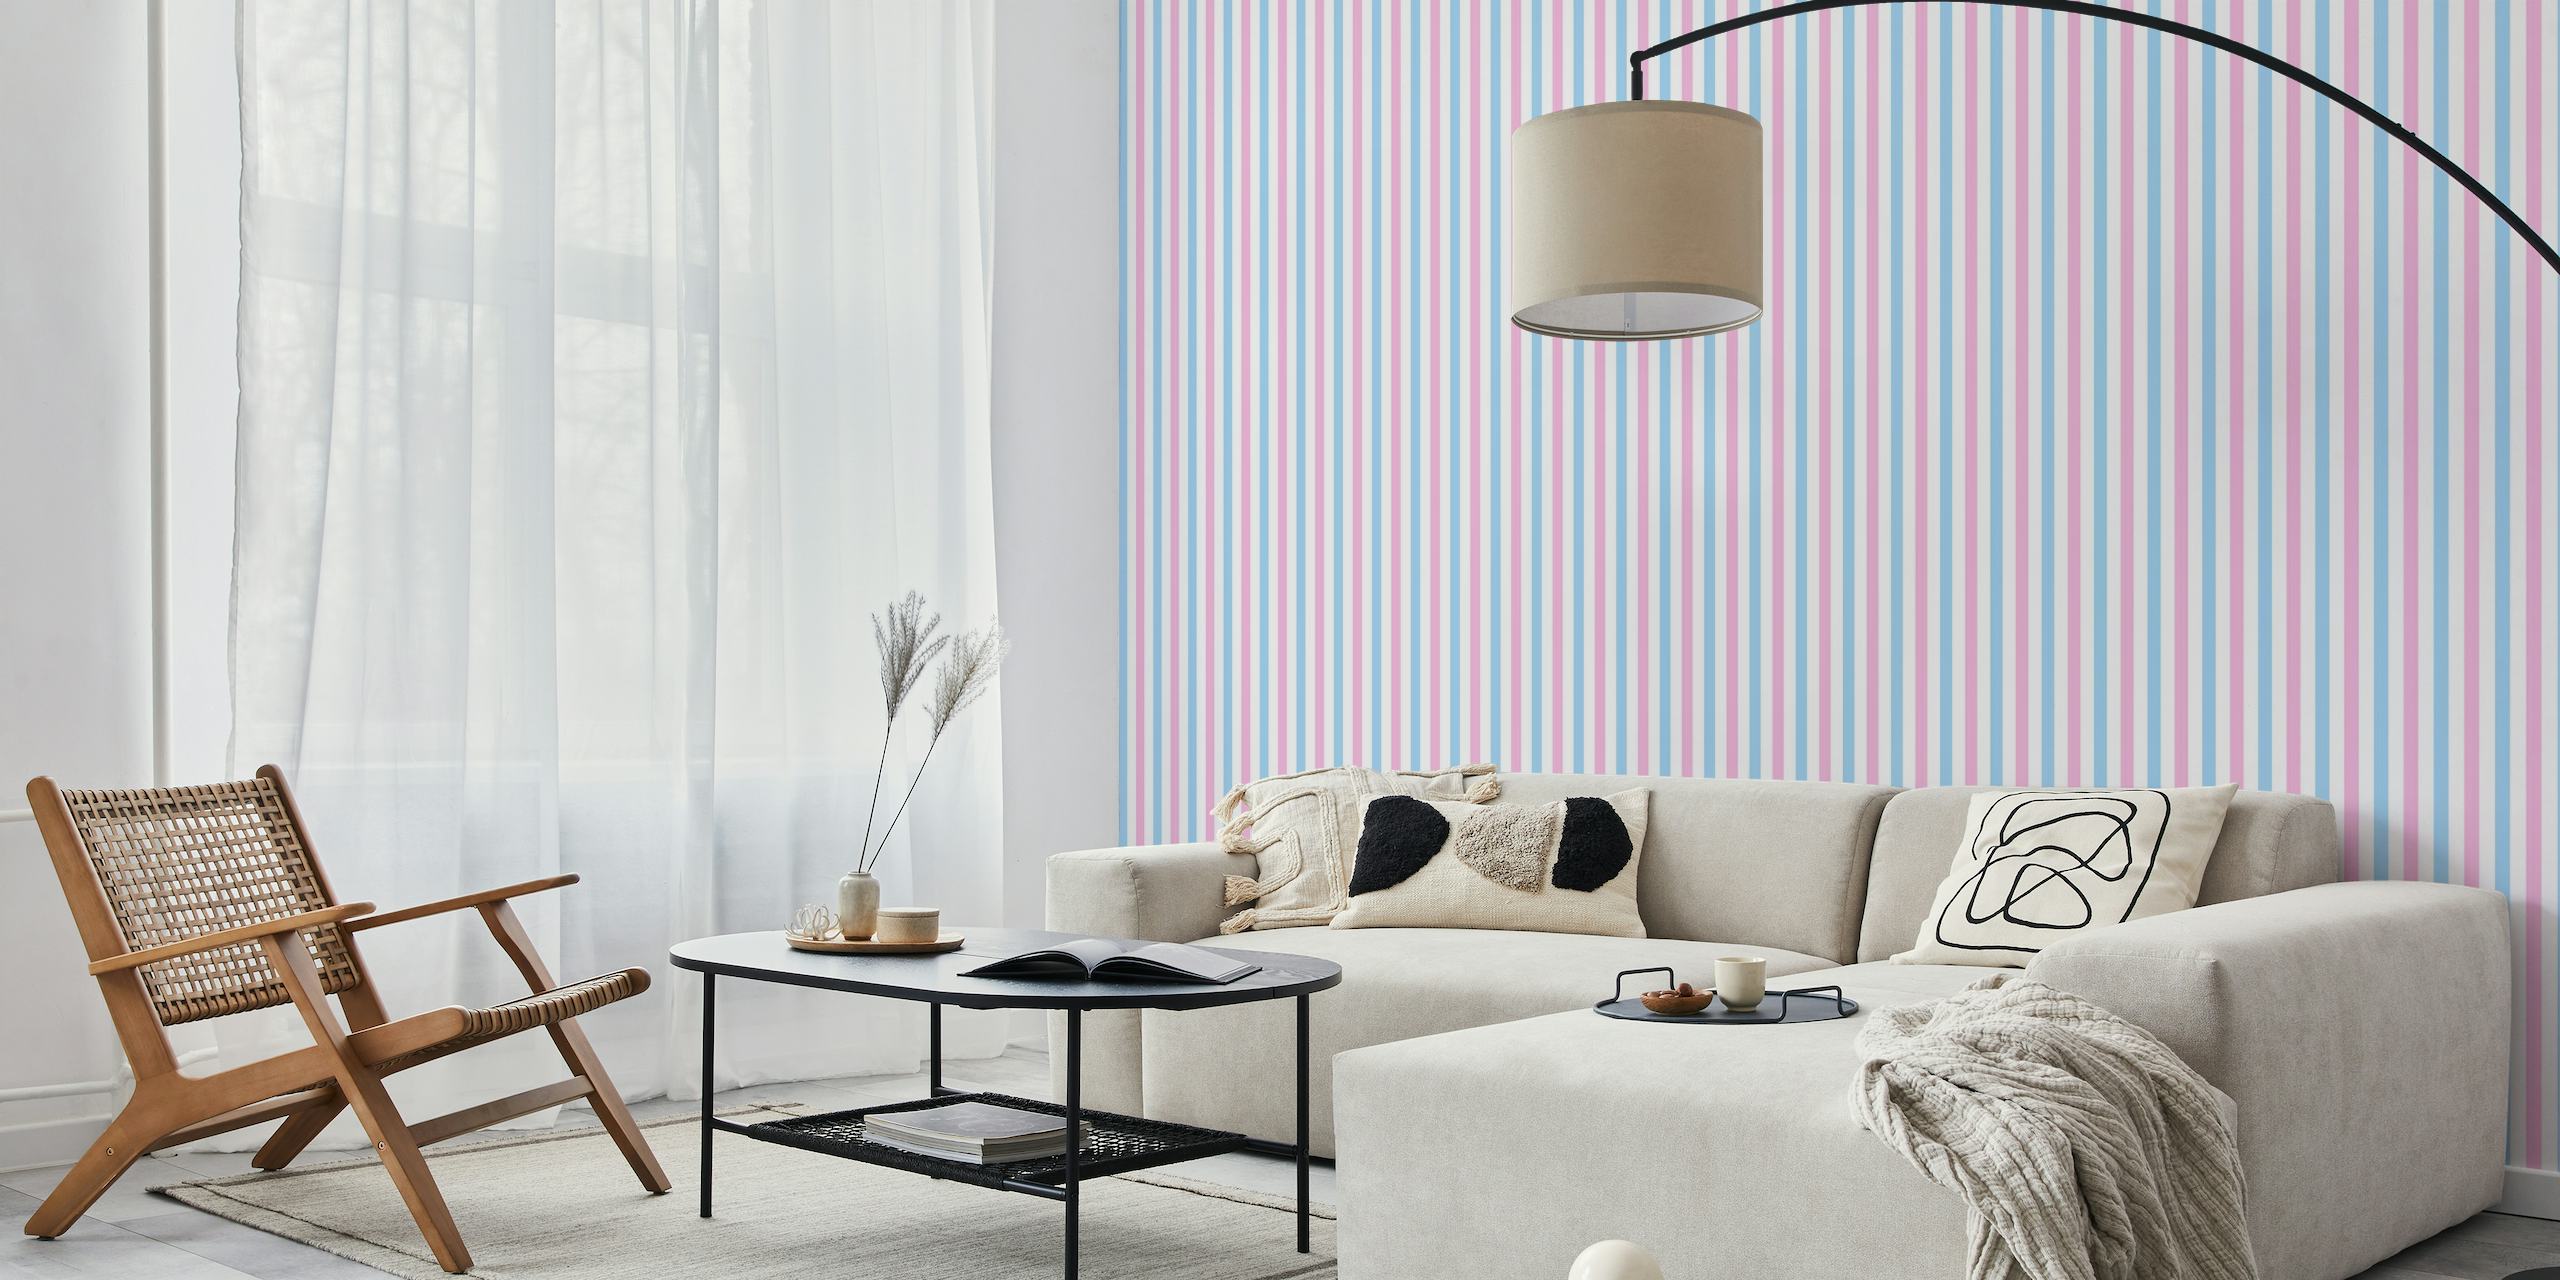 Light blue and pink vertical stripes wallpaper